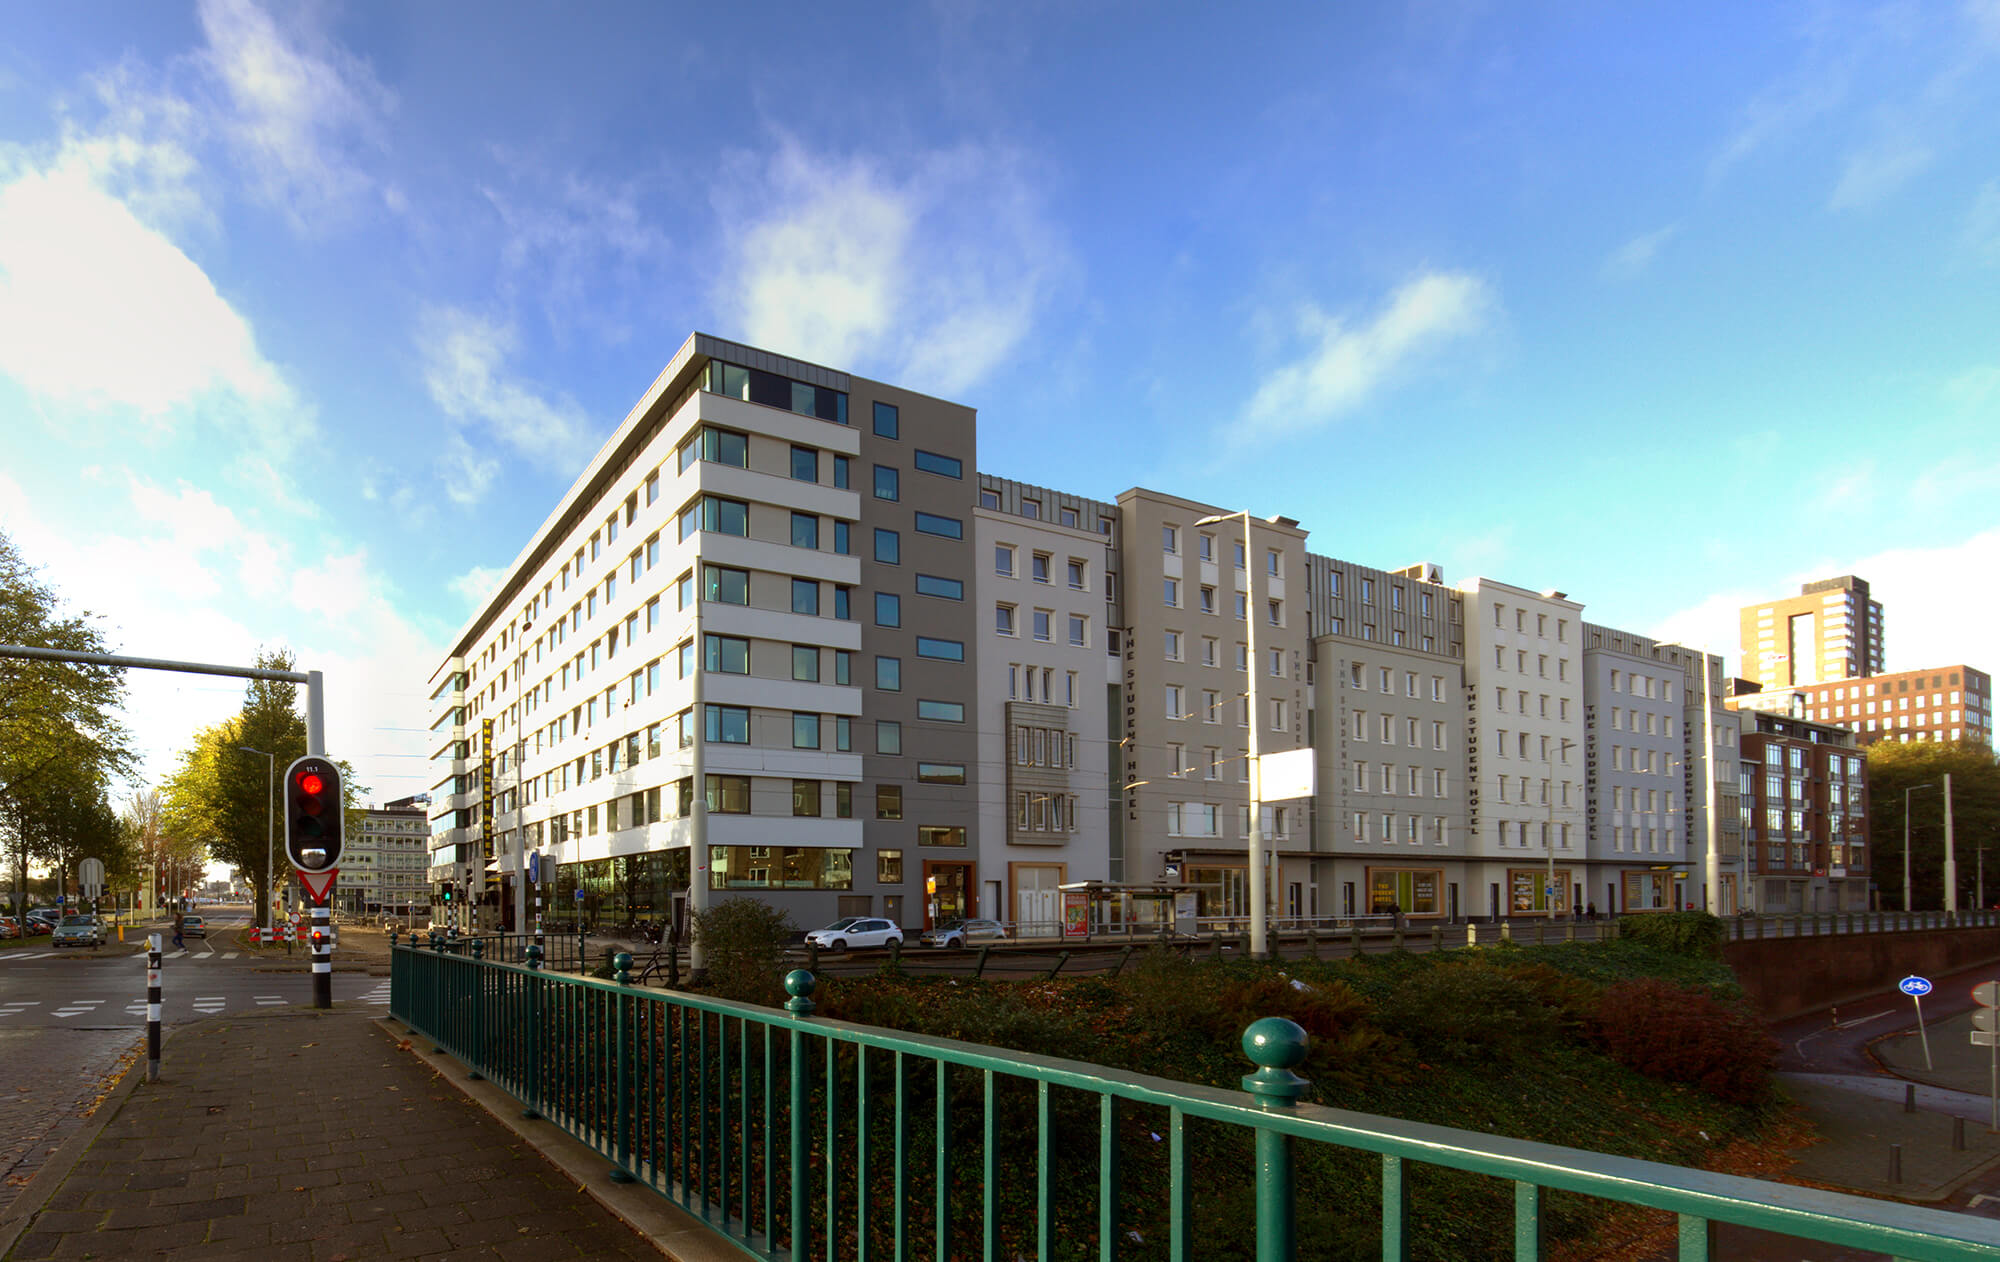 The Student Hotel Rotterdam I en II